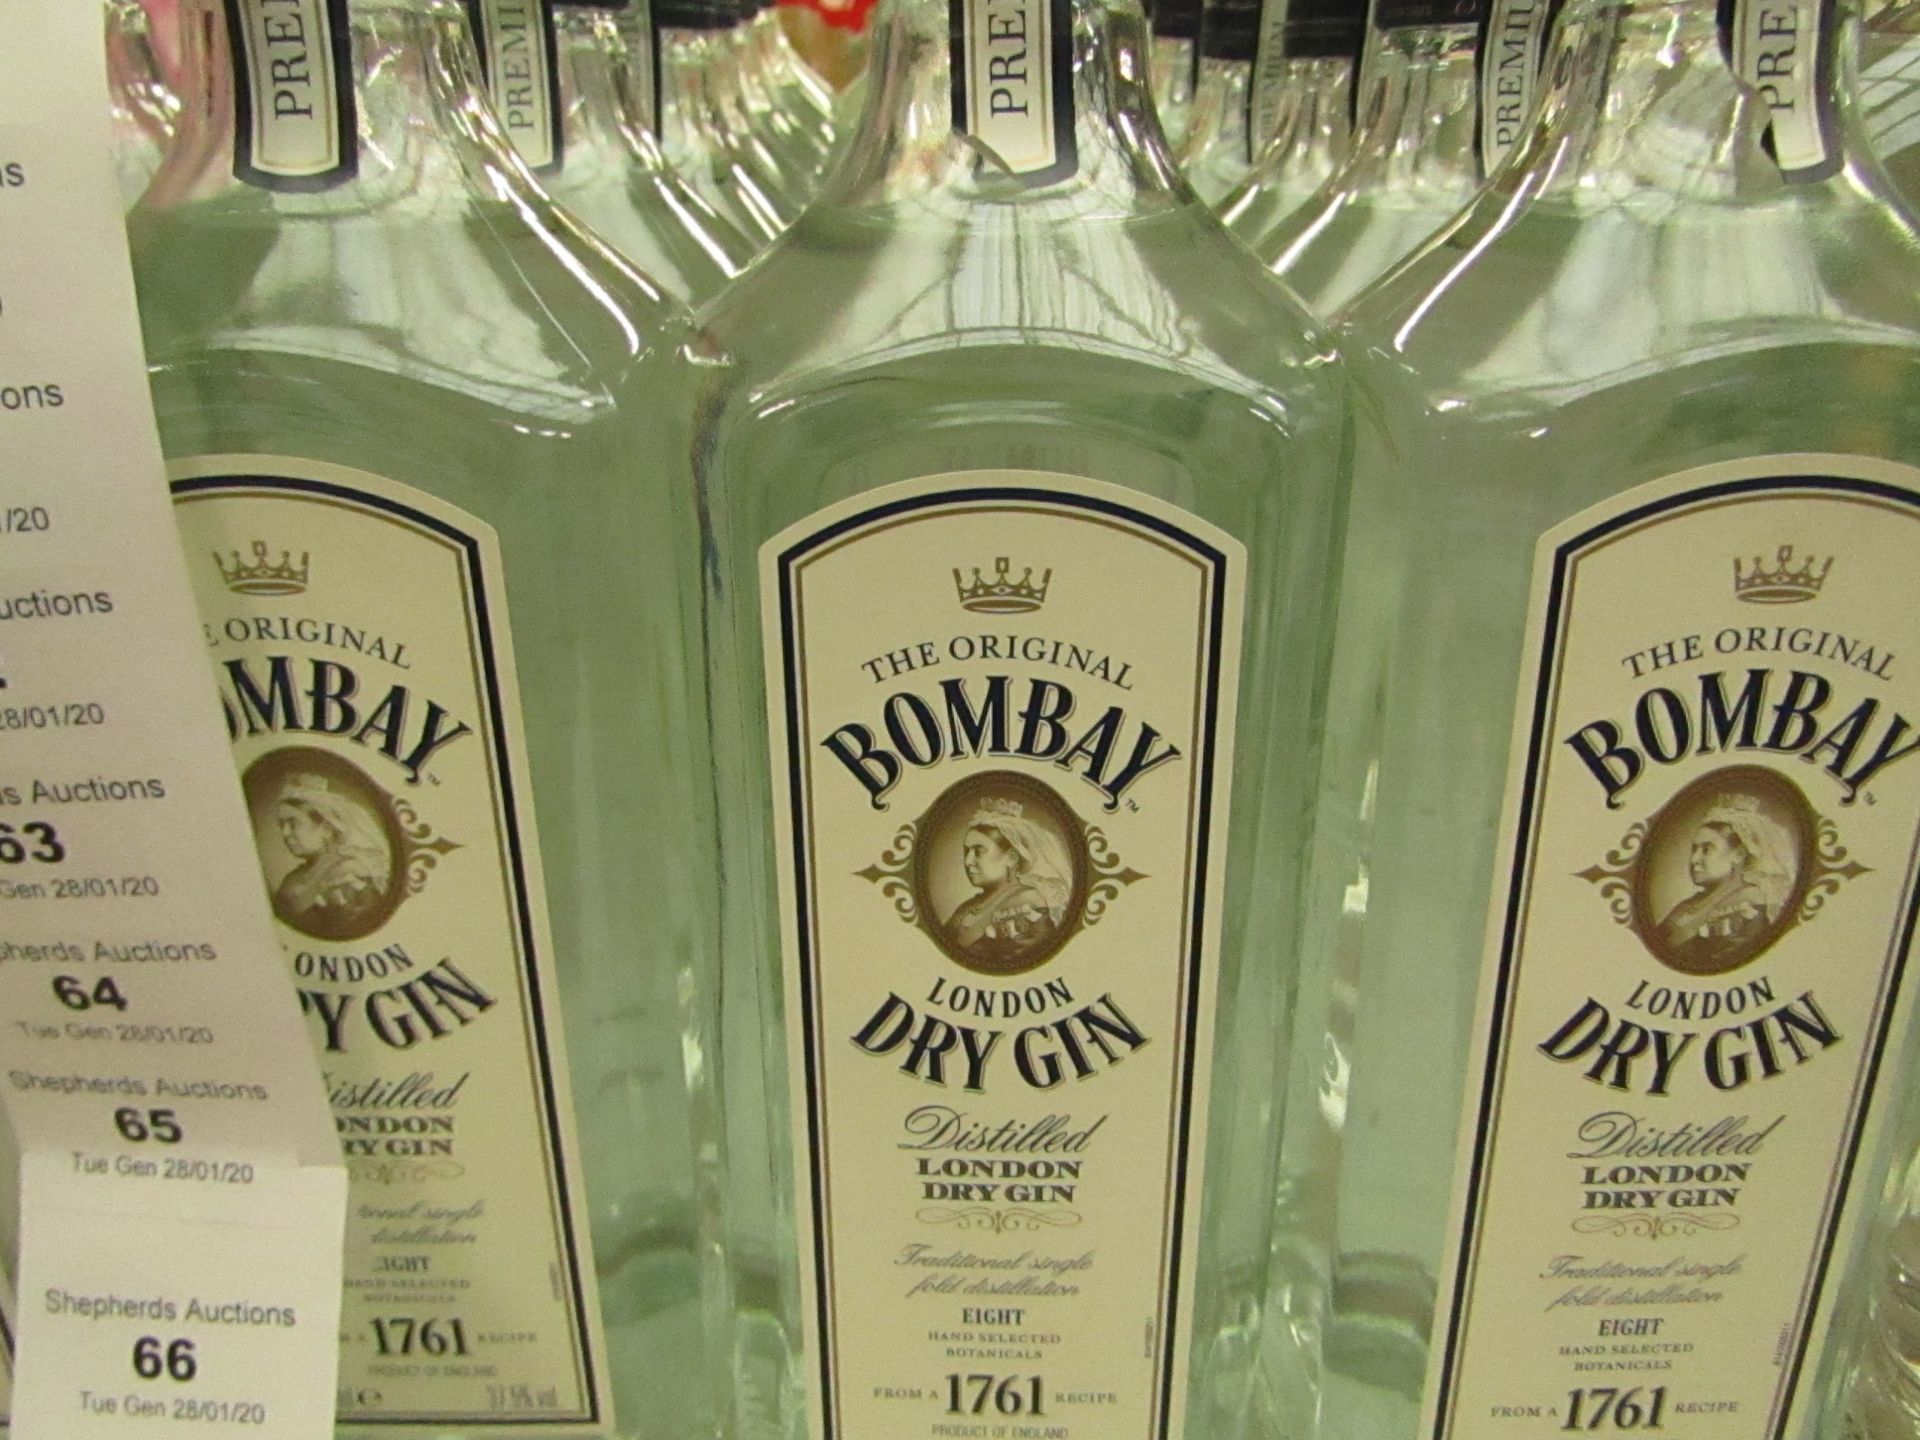 700ml Bombay London Dry Gin.37.5% new